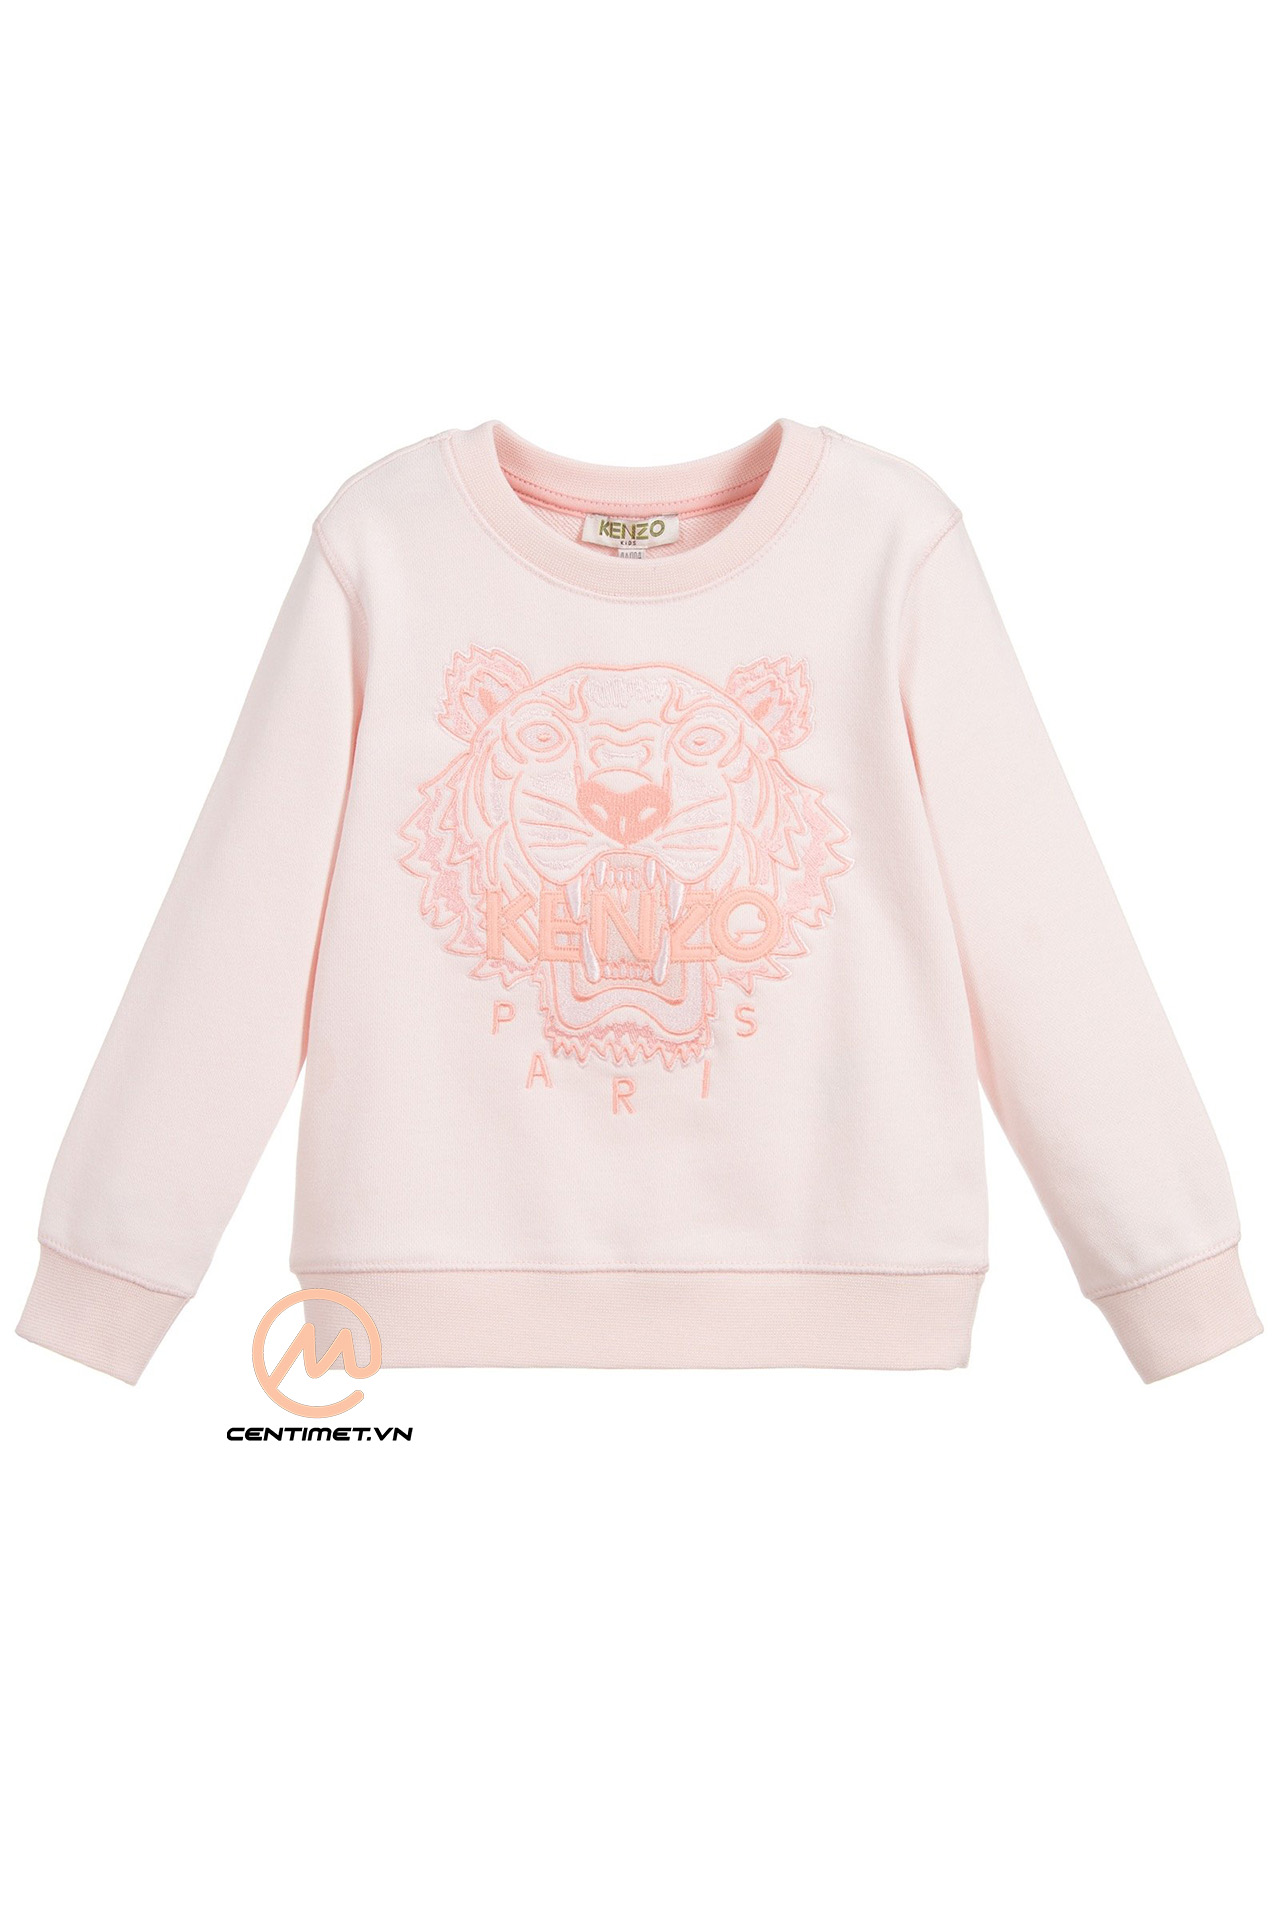 Áo Kenzo Tiger Embroidered Sweatshirt in pink-000213